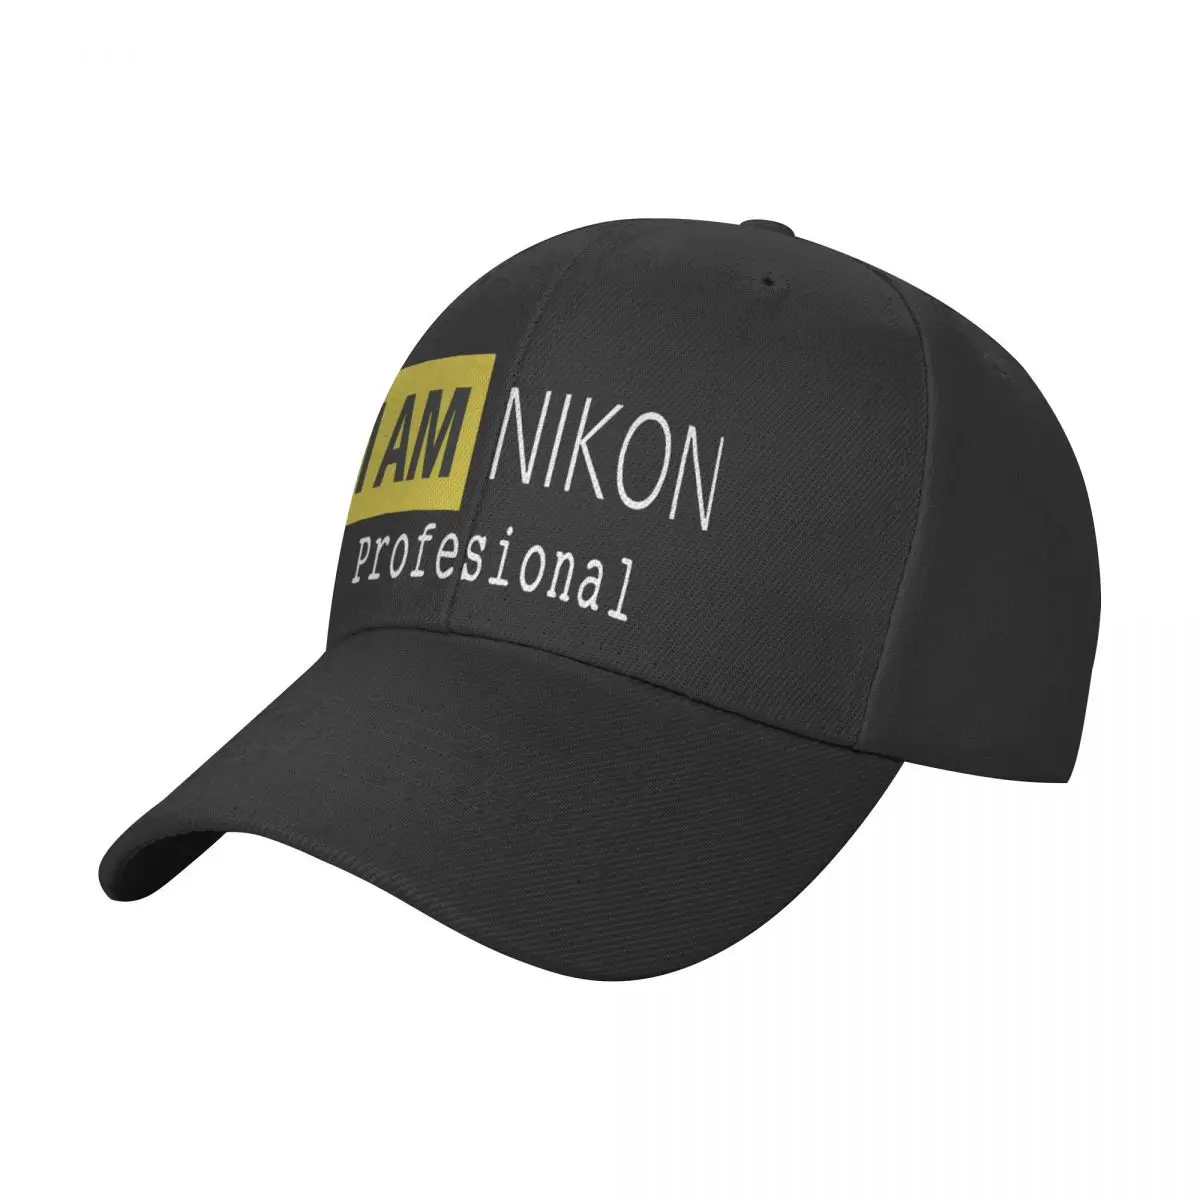 

New Popular Professional Nikon Photography Baseball Cap Peaked Cap Men's Hat Women's Cap Polo Cap Luxury Woman Hat